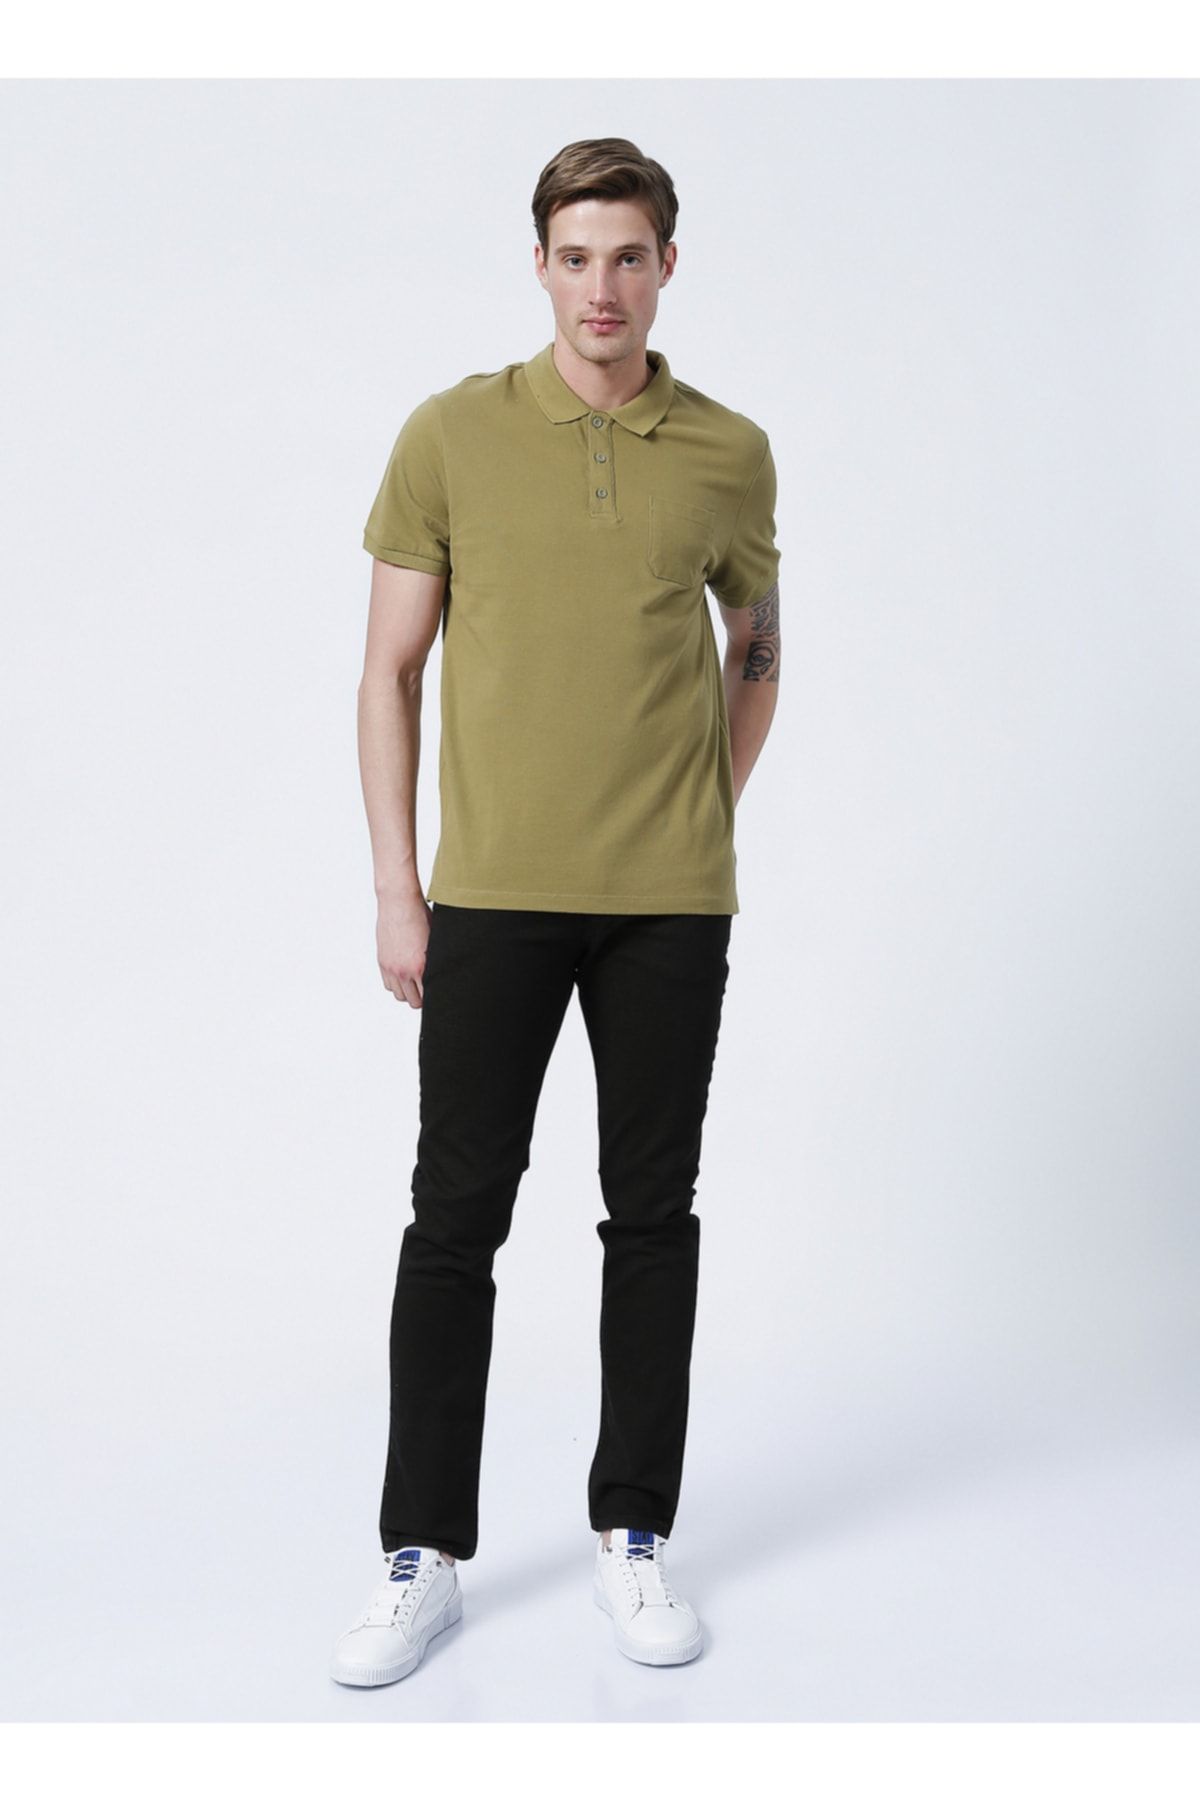 LİMON COMPANY Limon Basic Düz Açık Haki Erkek Polo T-shirt - Skor21